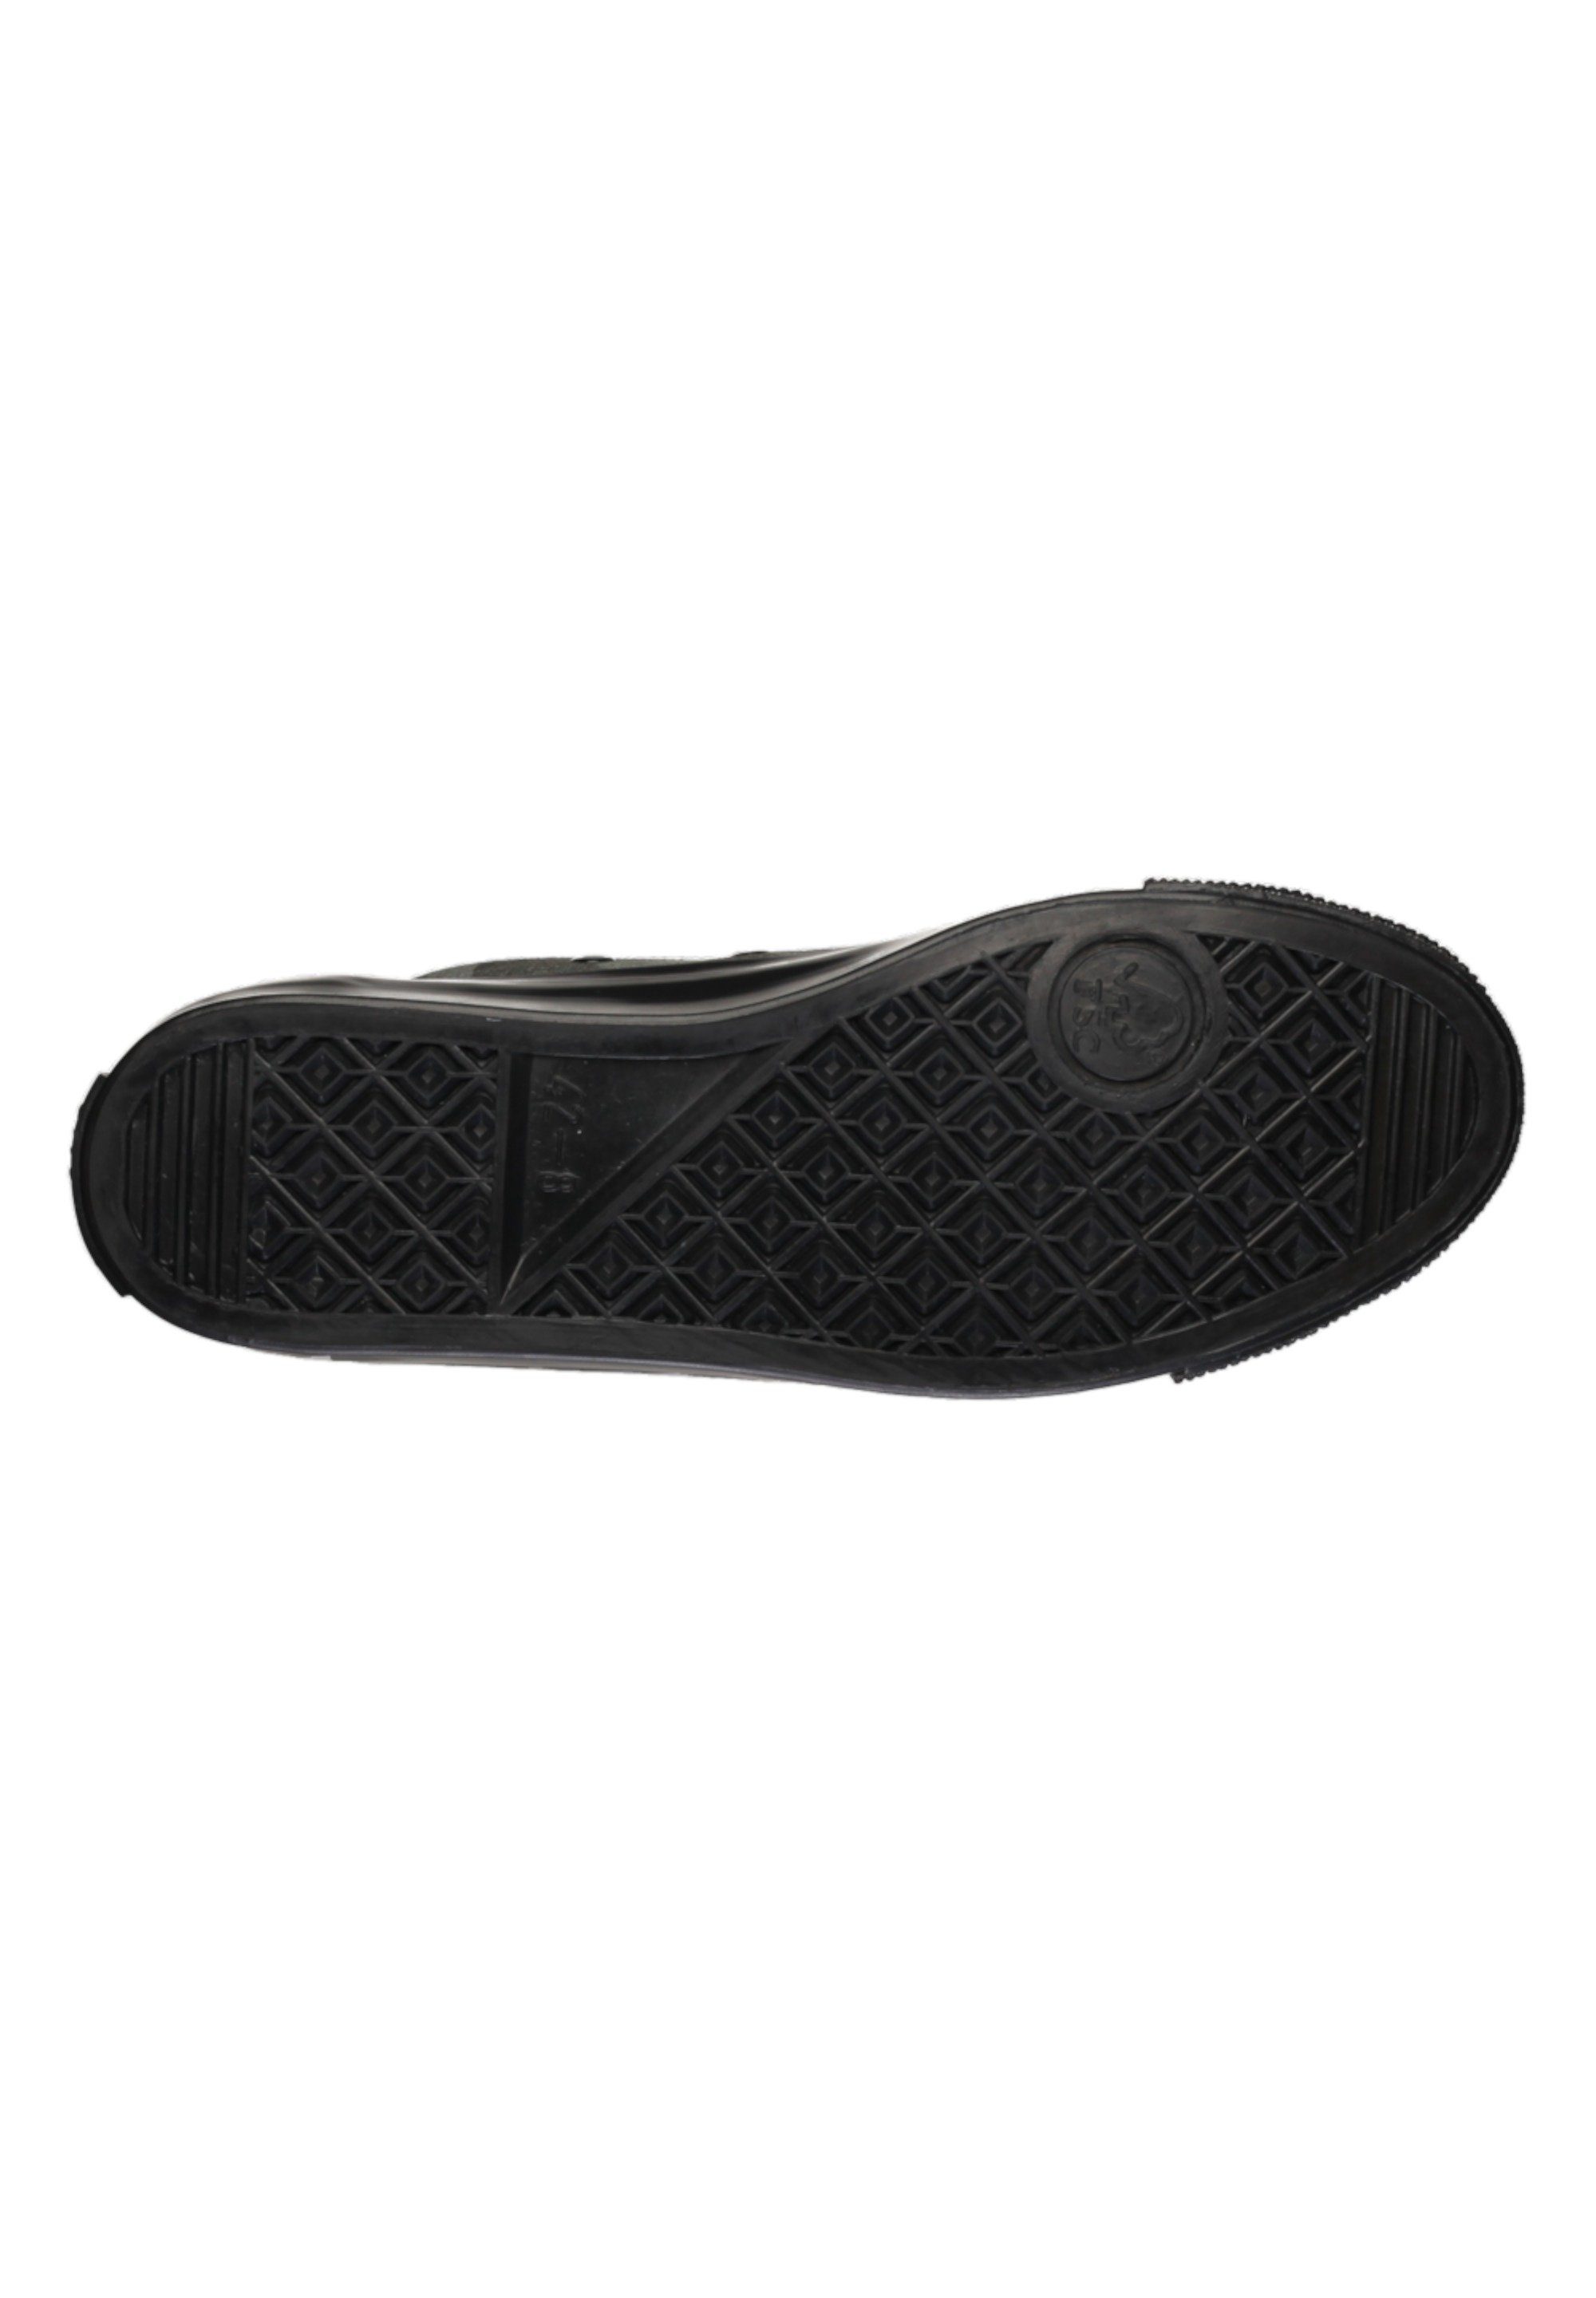 ETHLETIC Black Cap Hi Cut Produkt Black Black - Camou Fairtrade Jet Sneaker